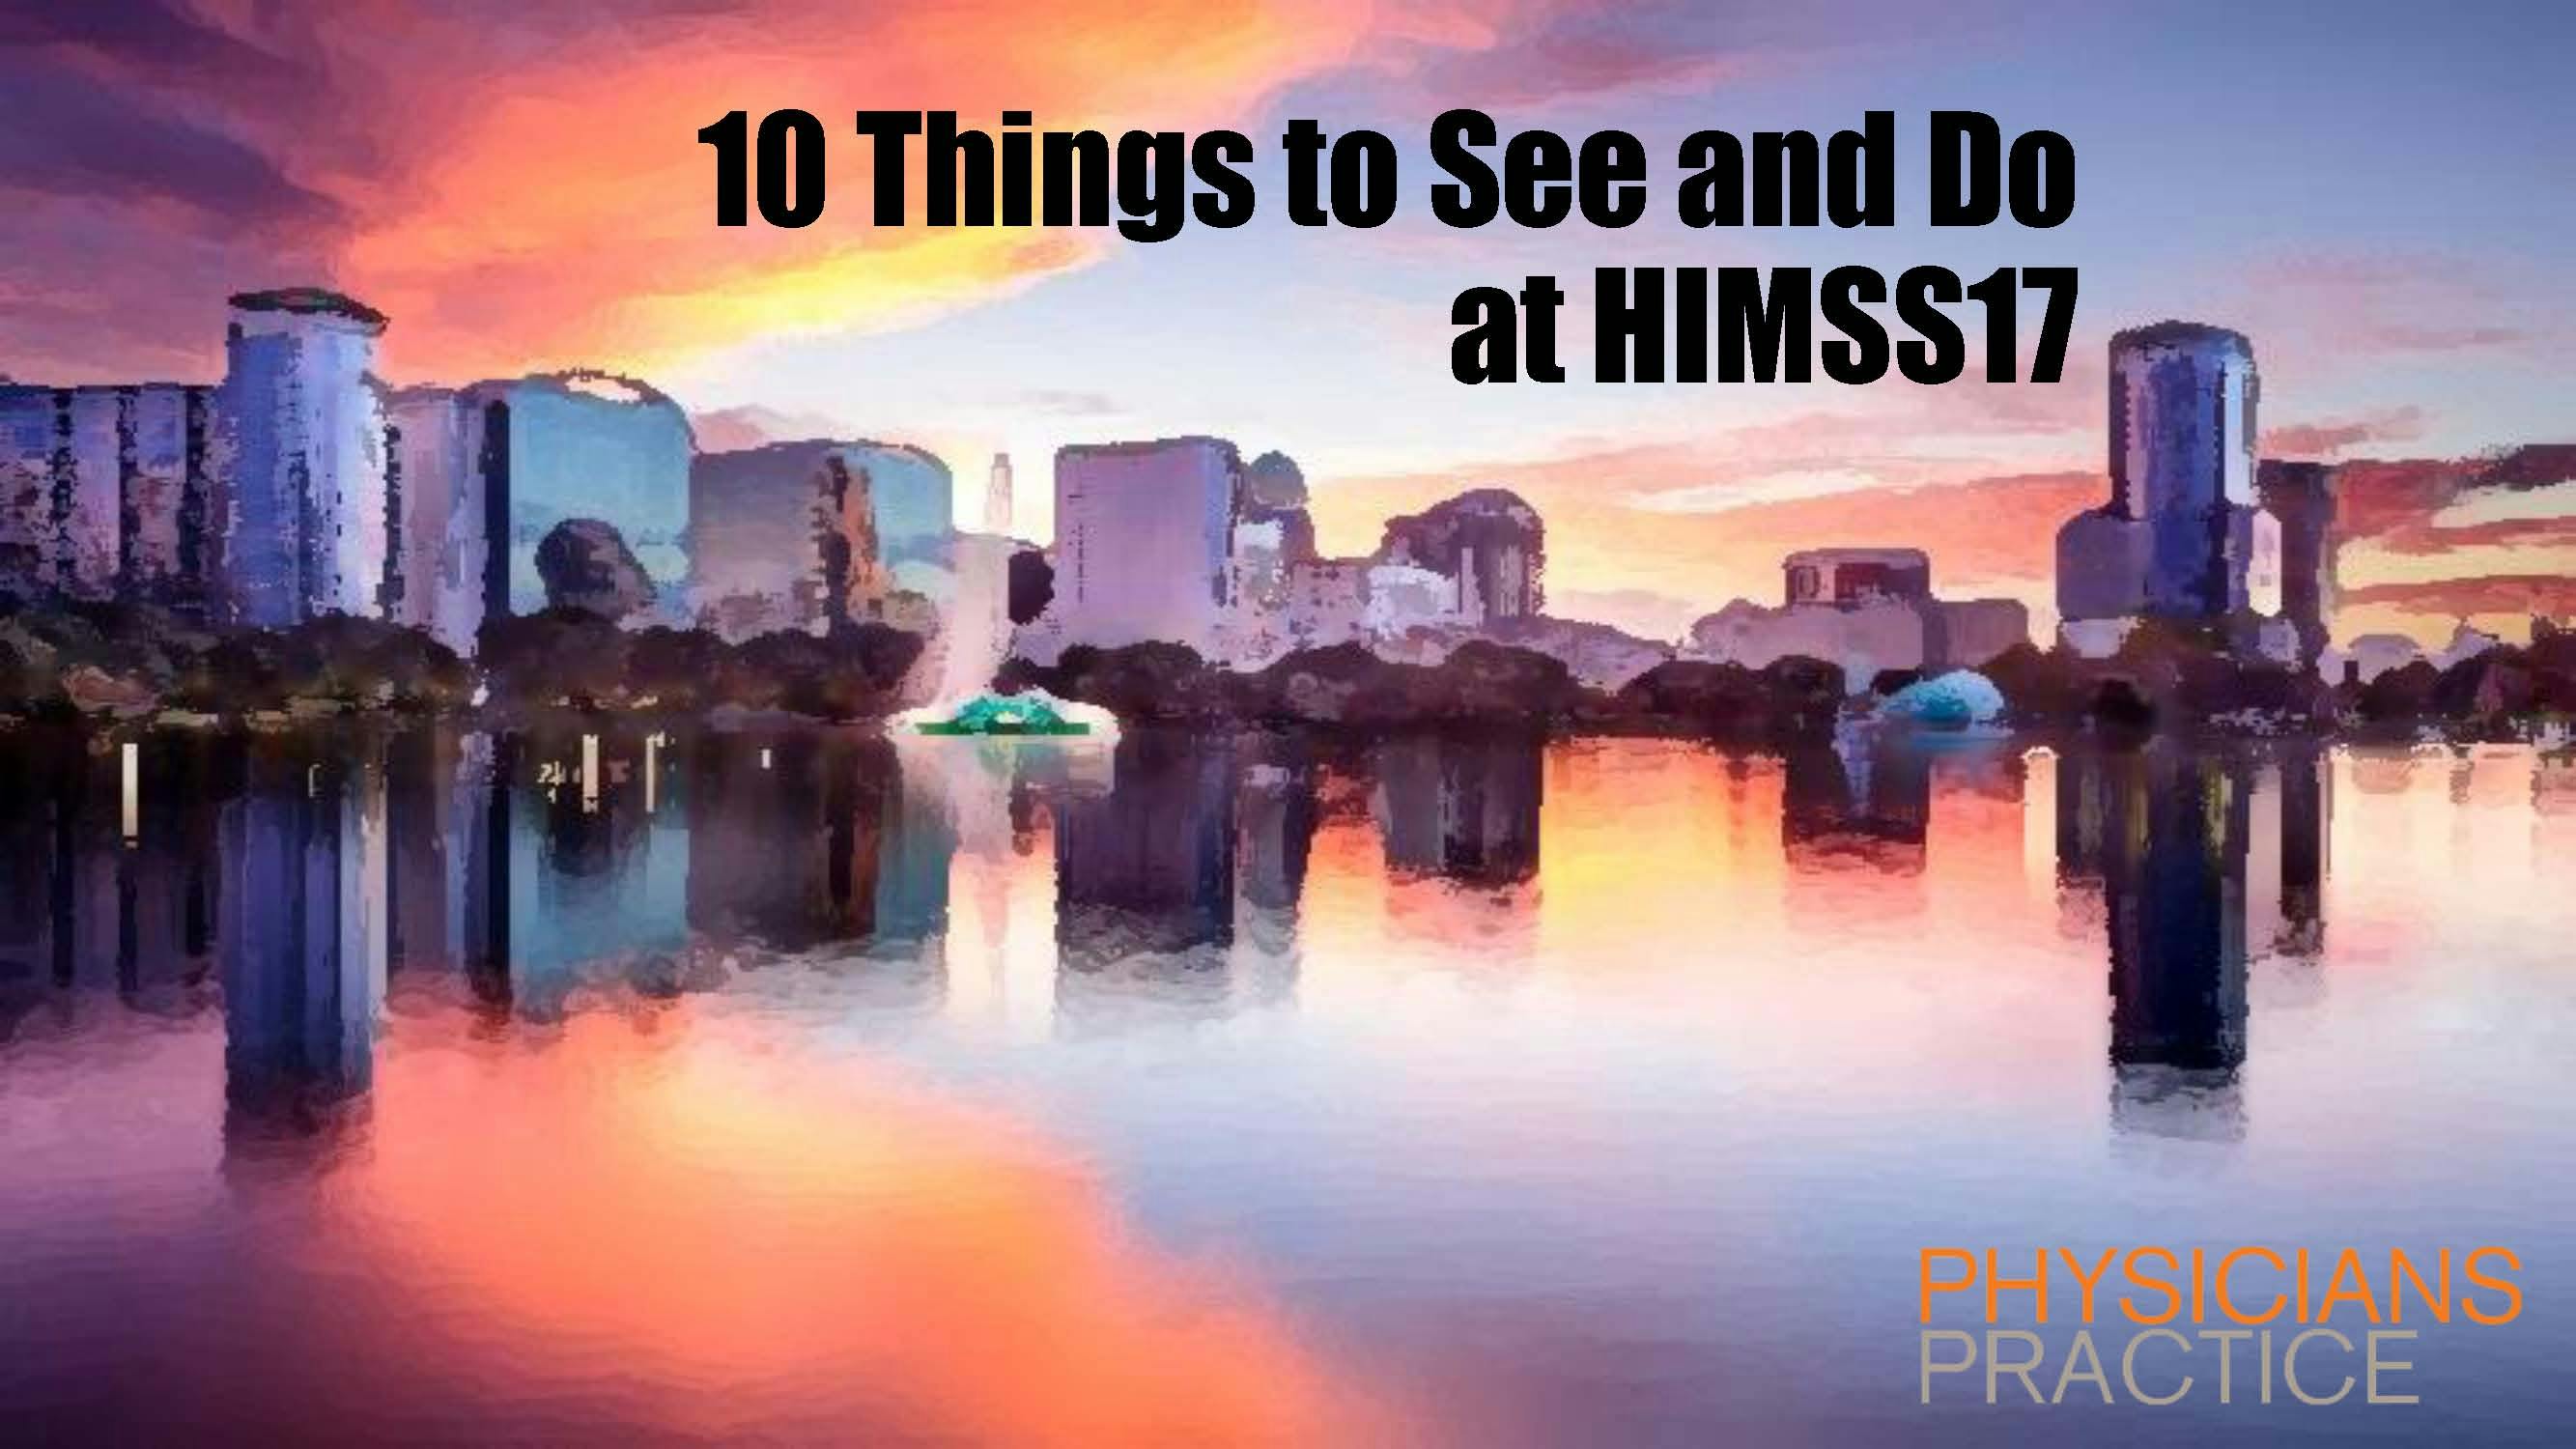 10 Things to See and Do at HIMSS17 